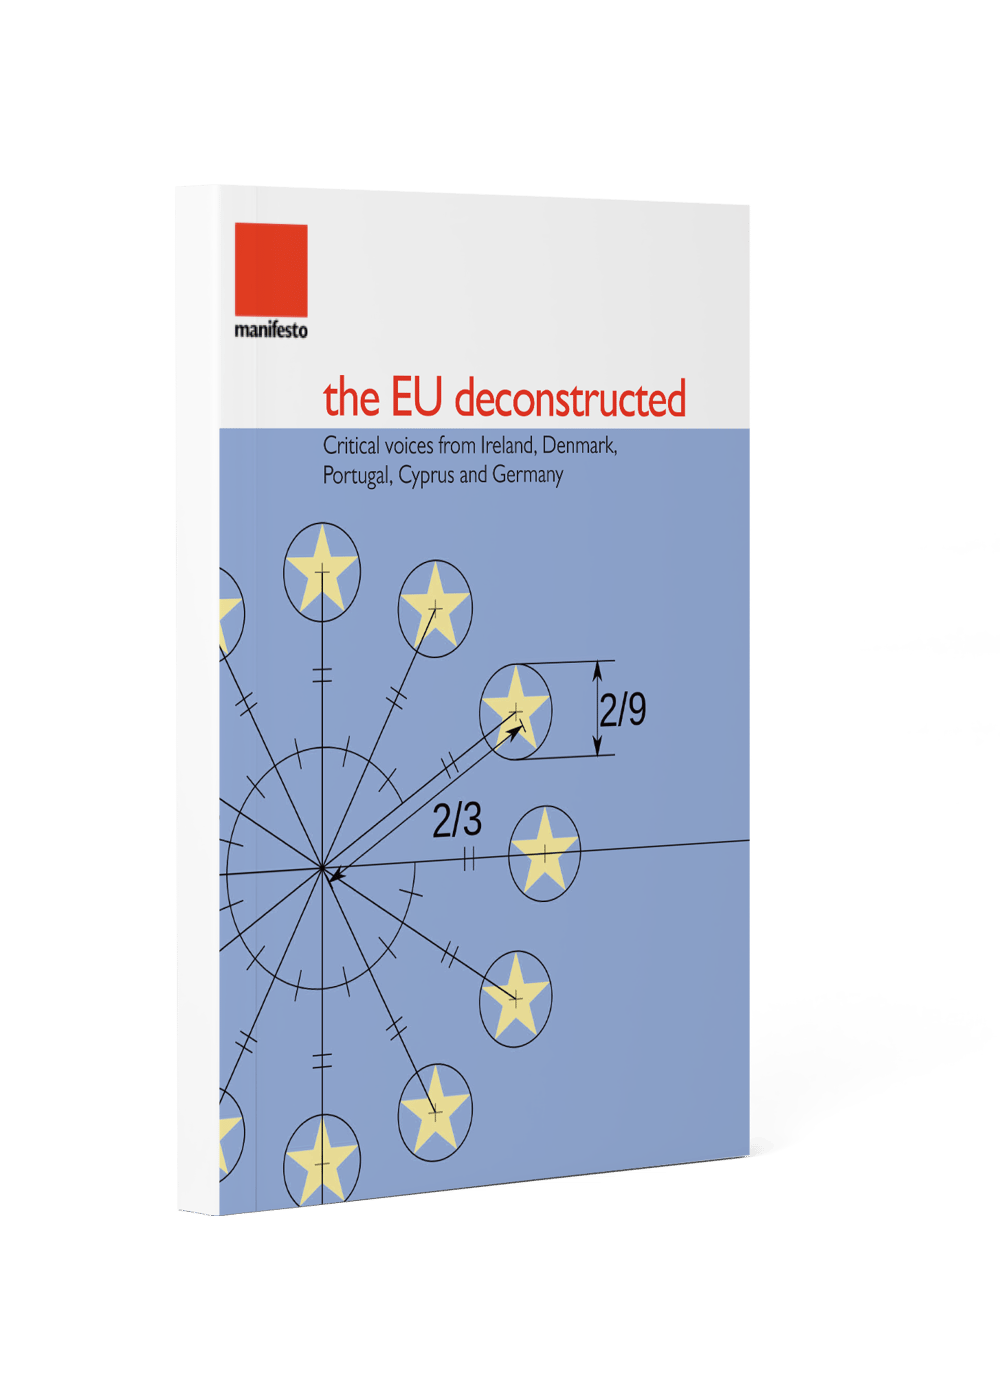 The EU deconstructed